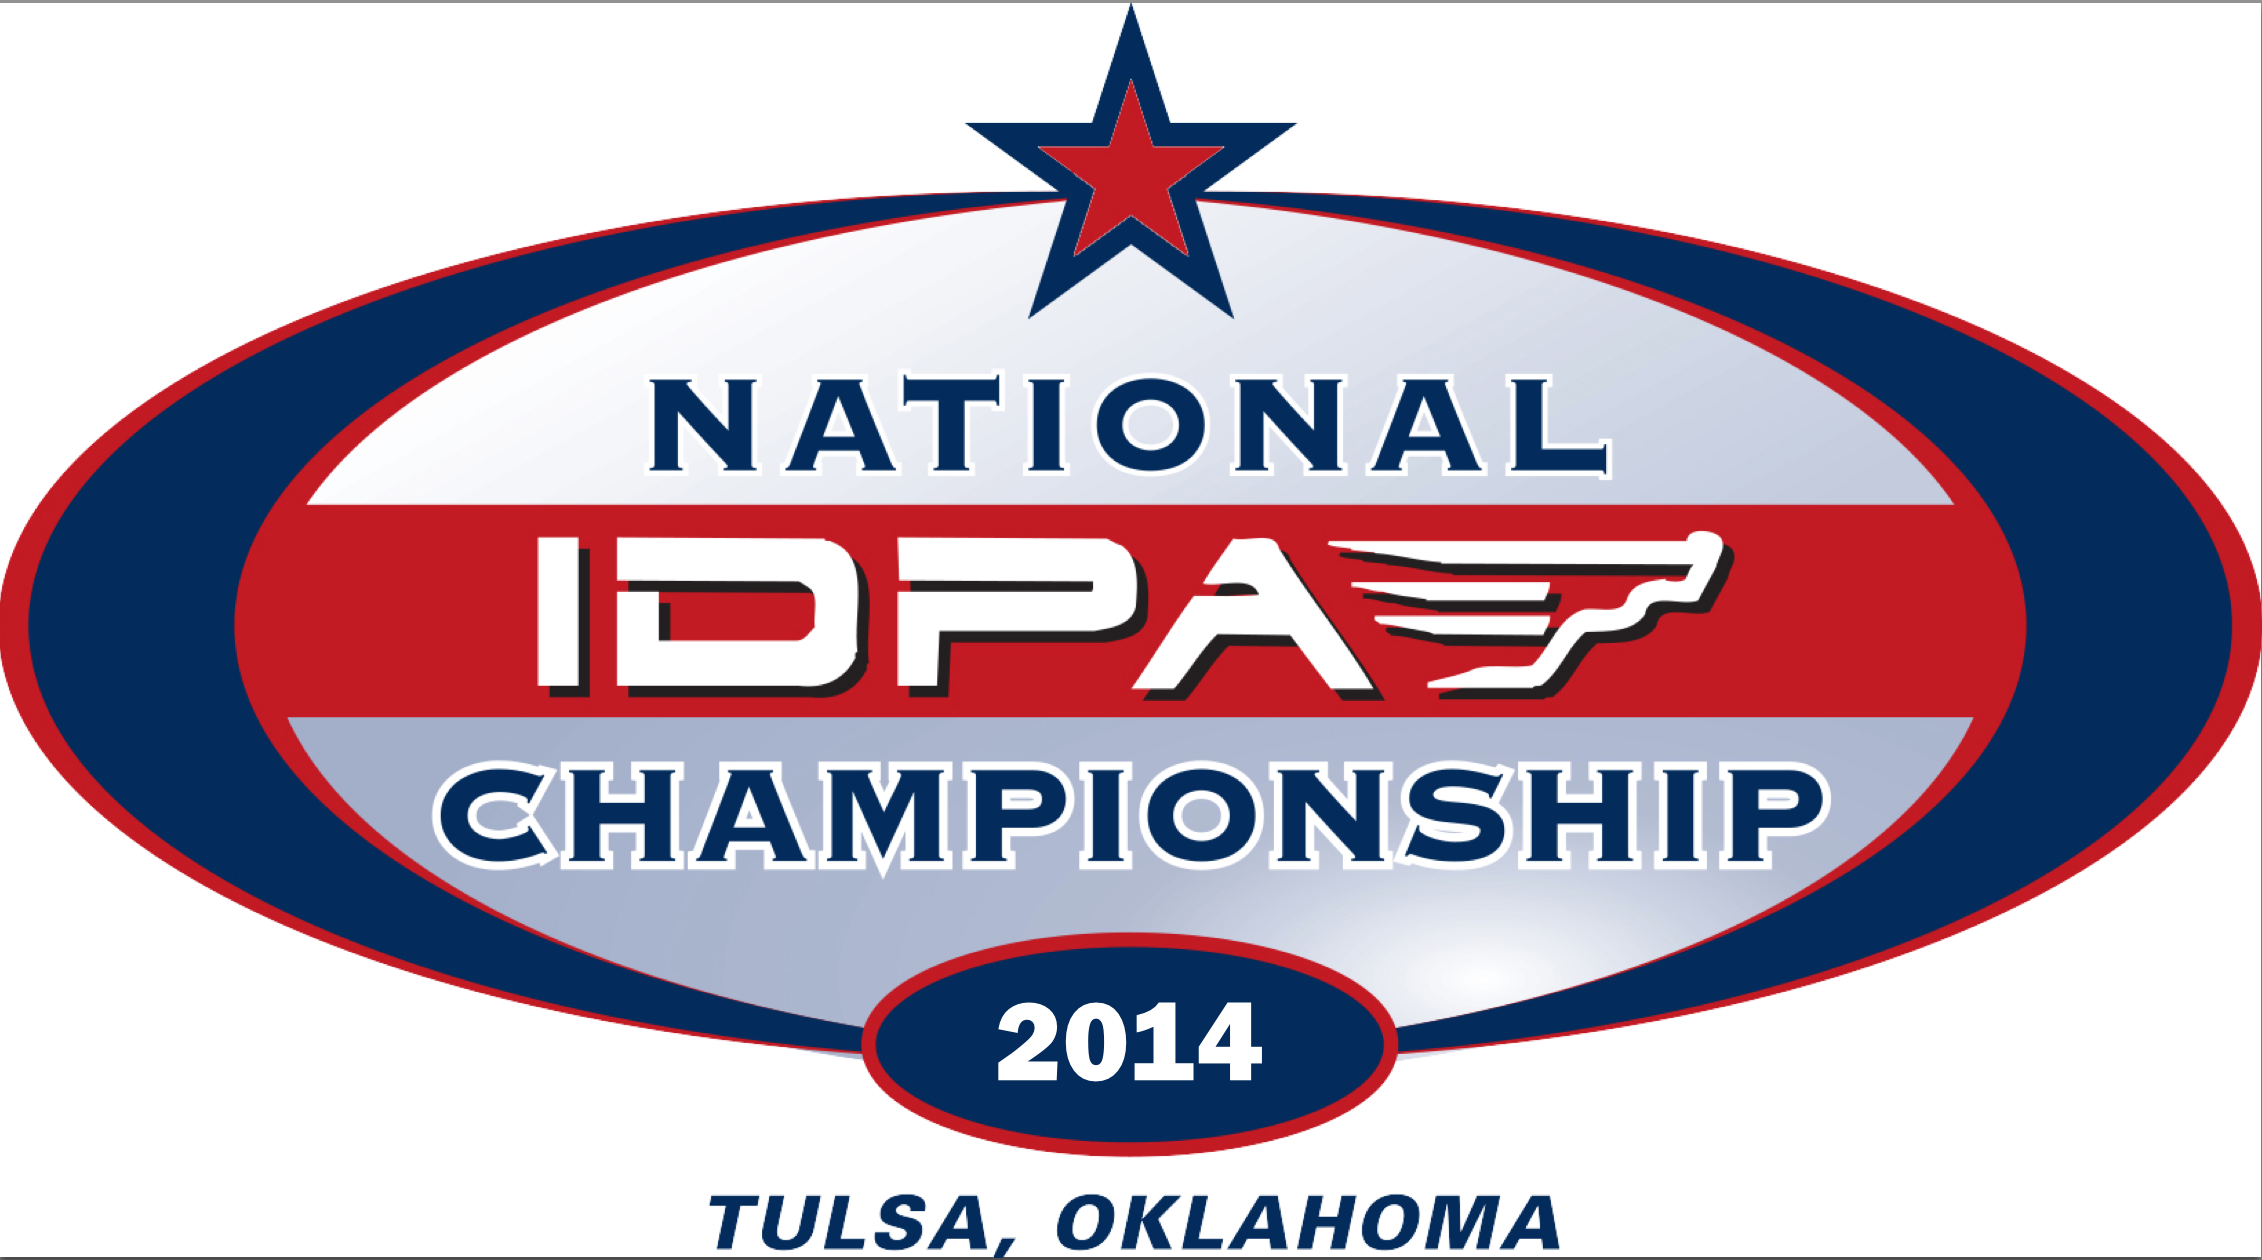 Federal Premium Sponsors 2014 IDPA U.S. National Championship OutdoorHub